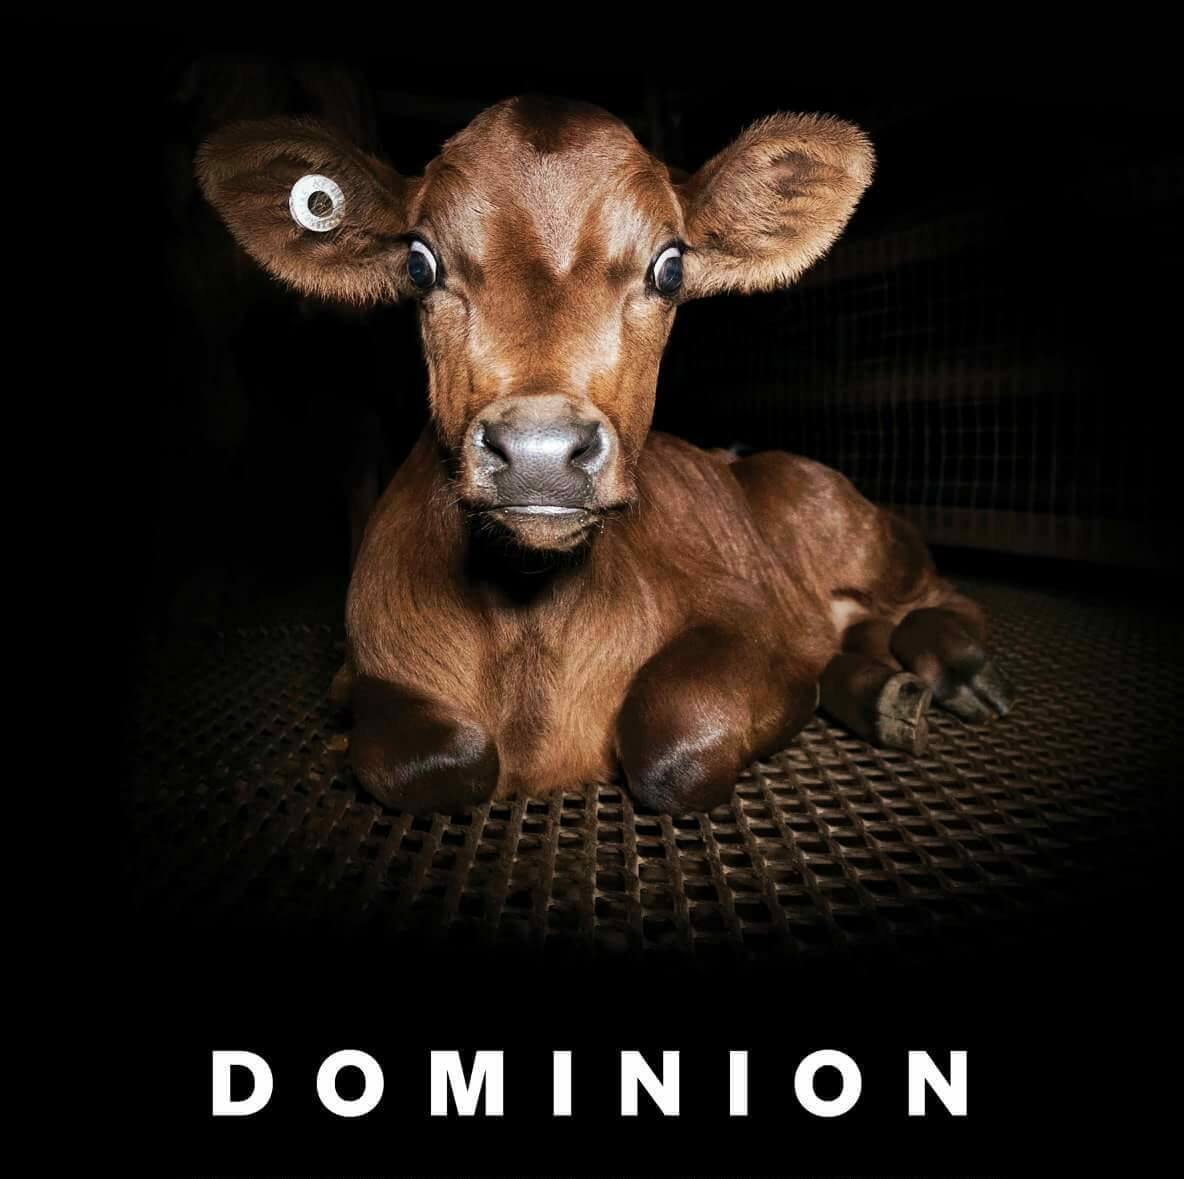 Dominion Documentary